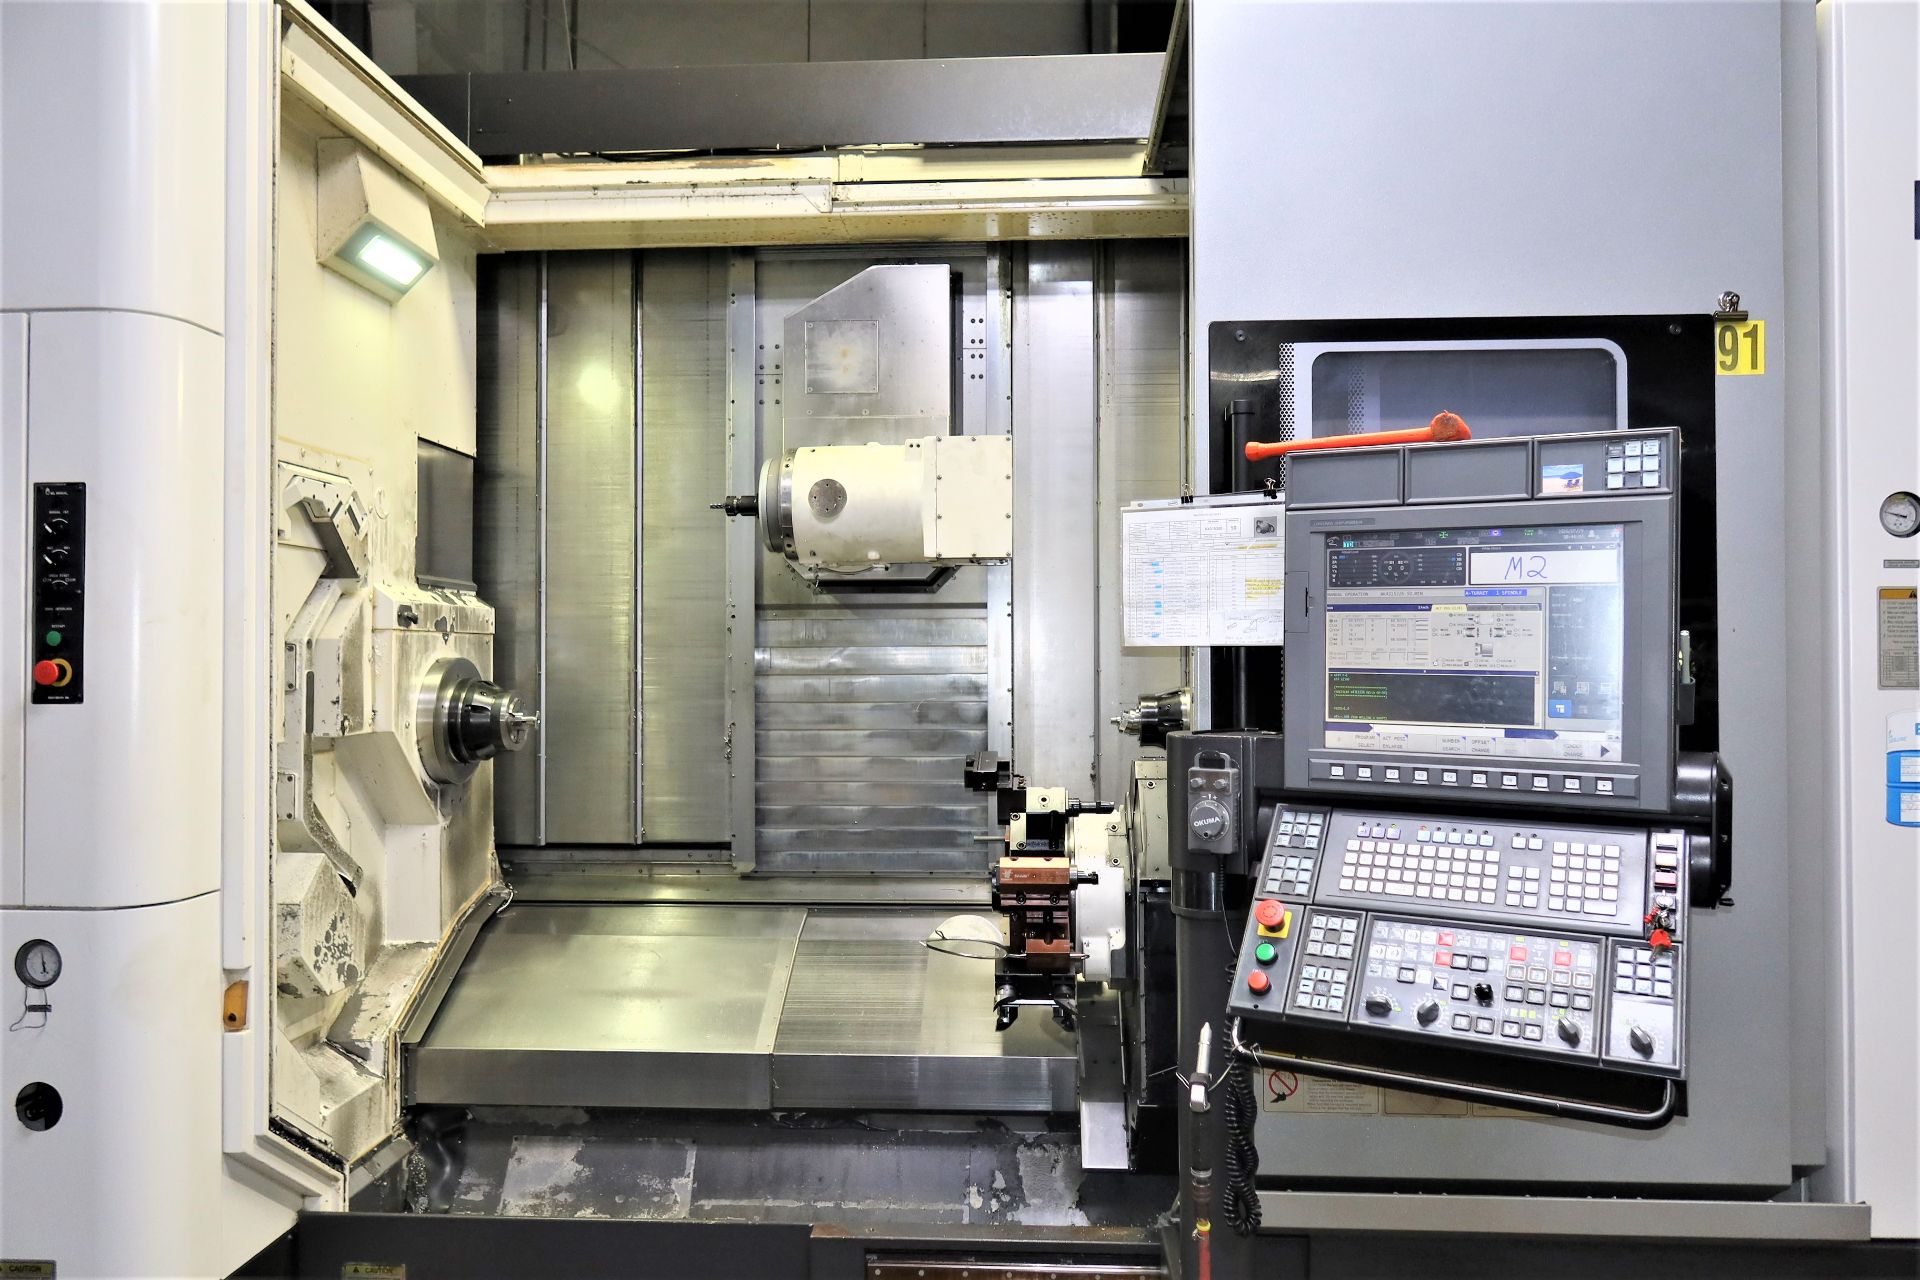 Okuma Multus U3000 5-Axis CNC Mill Lathe, New 2015 - Image 2 of 15